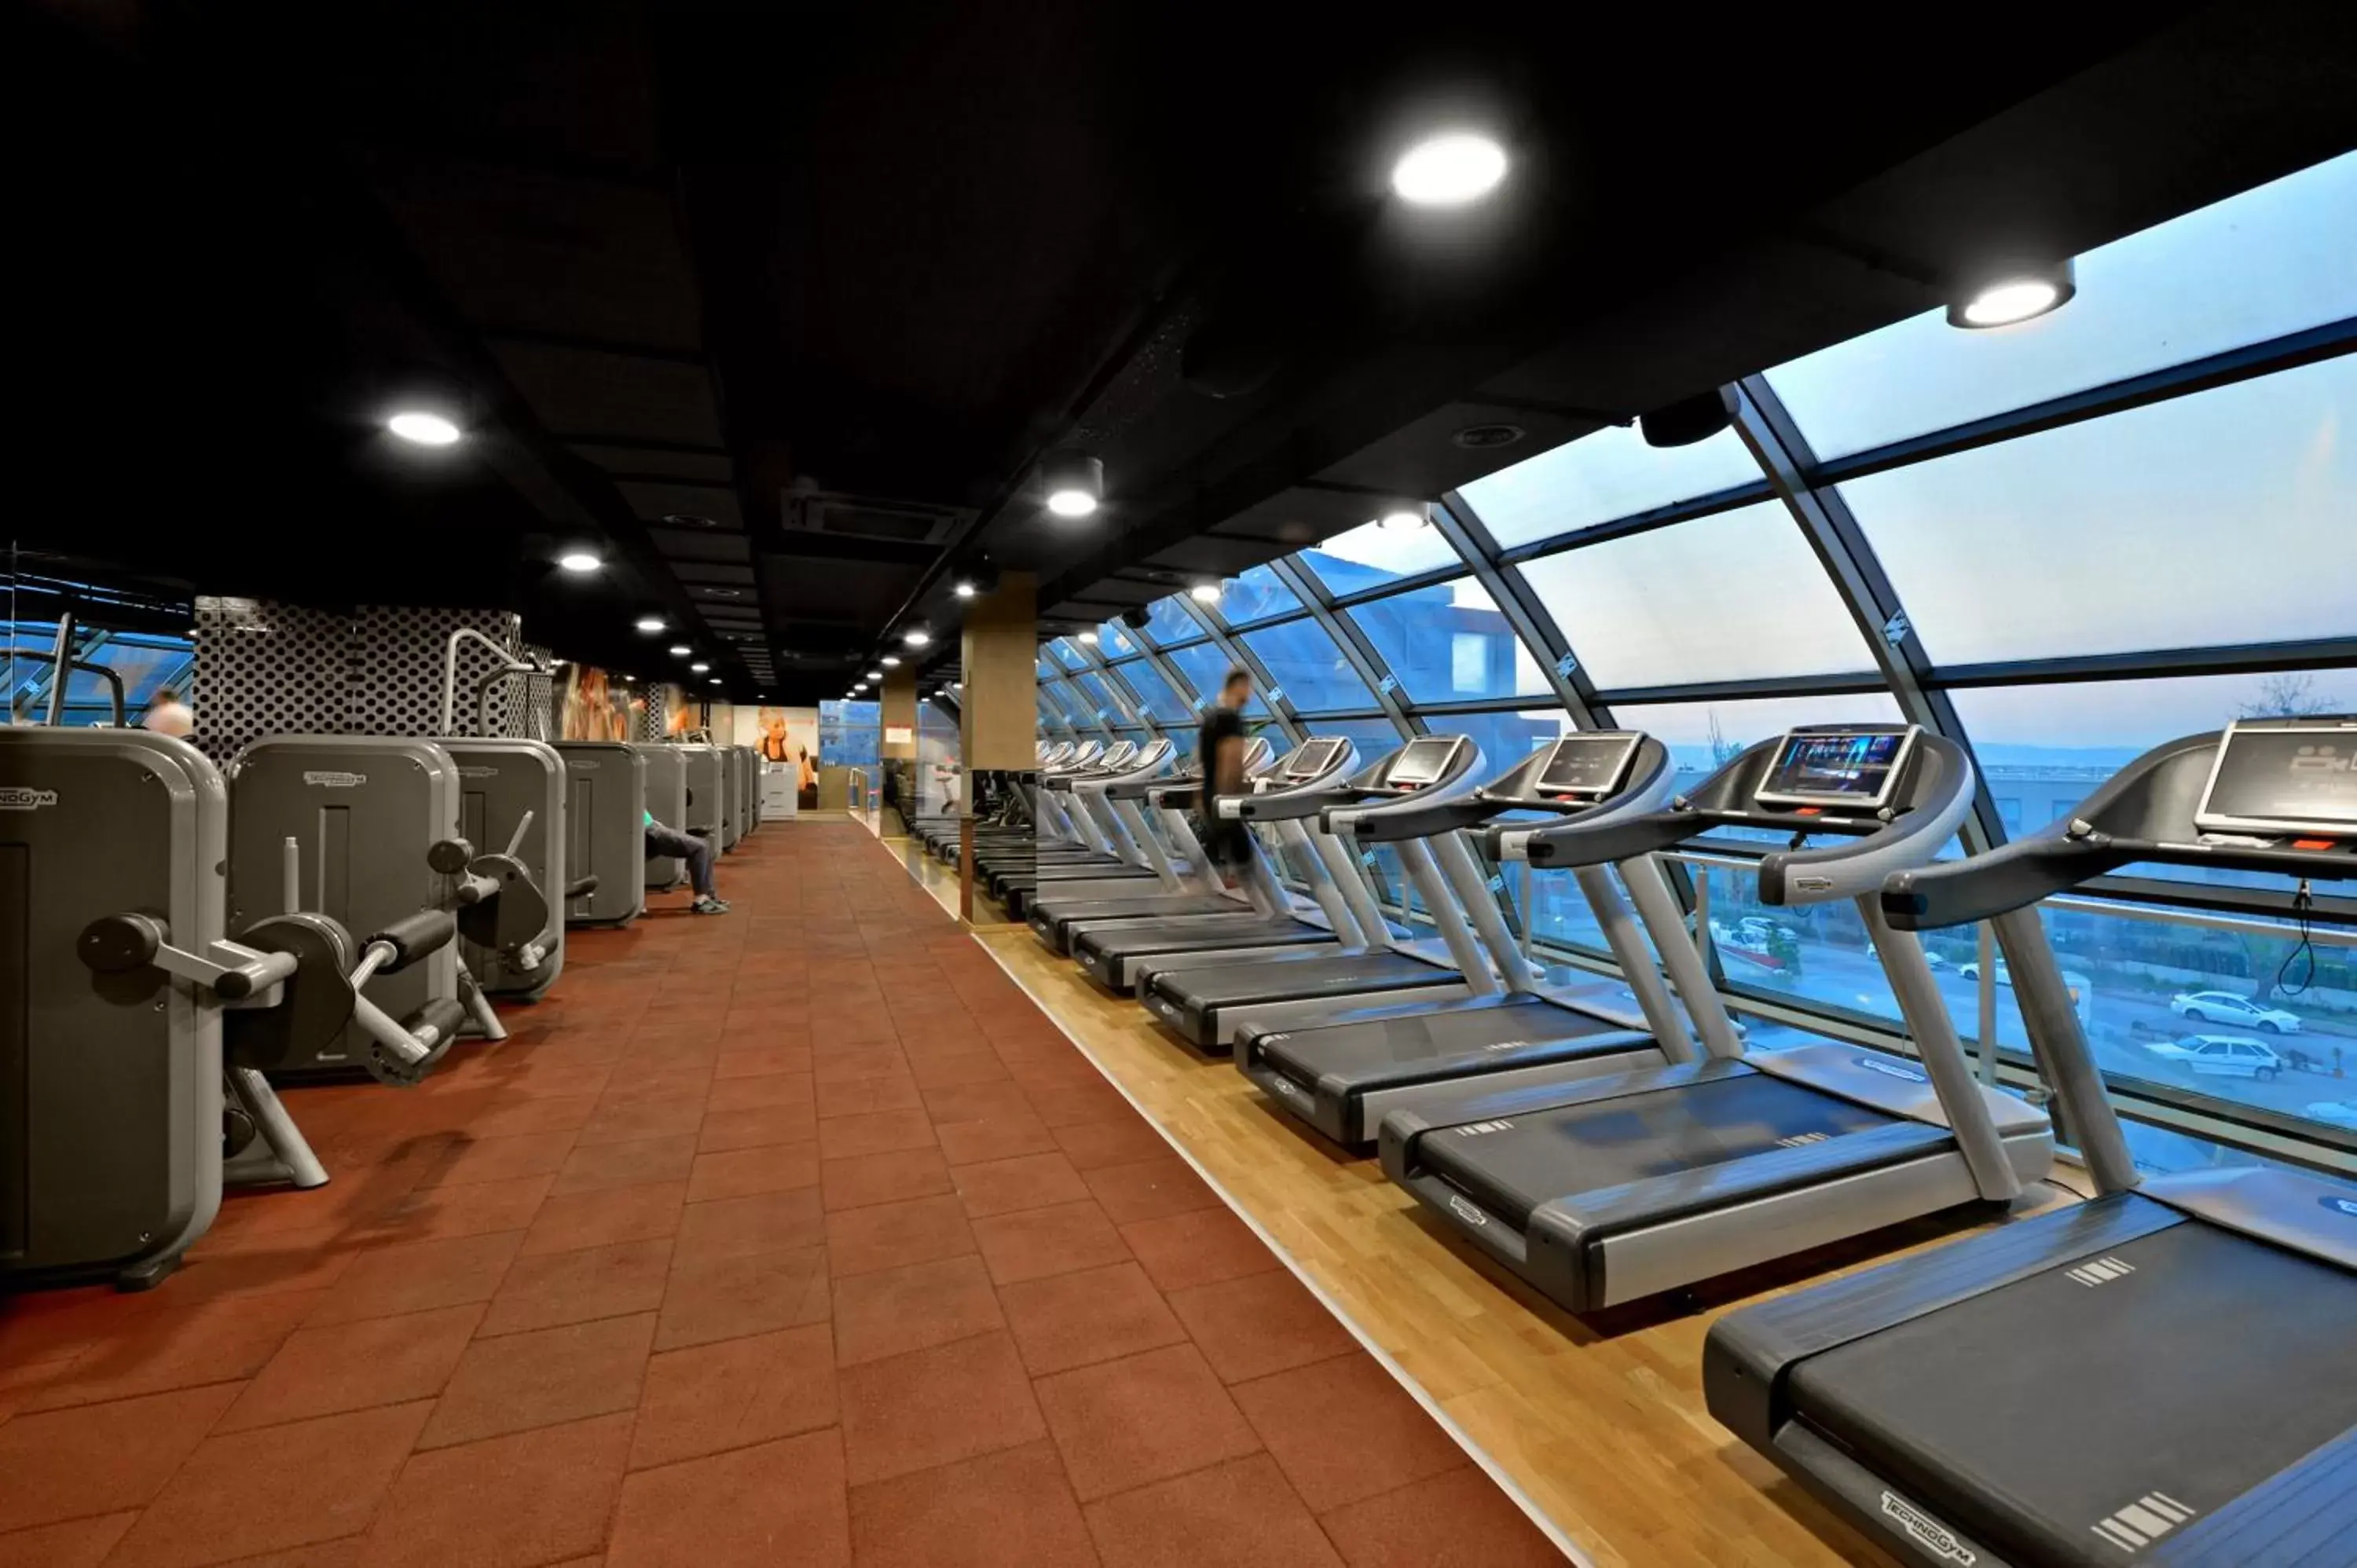 Fitness centre/facilities, Fitness Center/Facilities in Divan Bursa